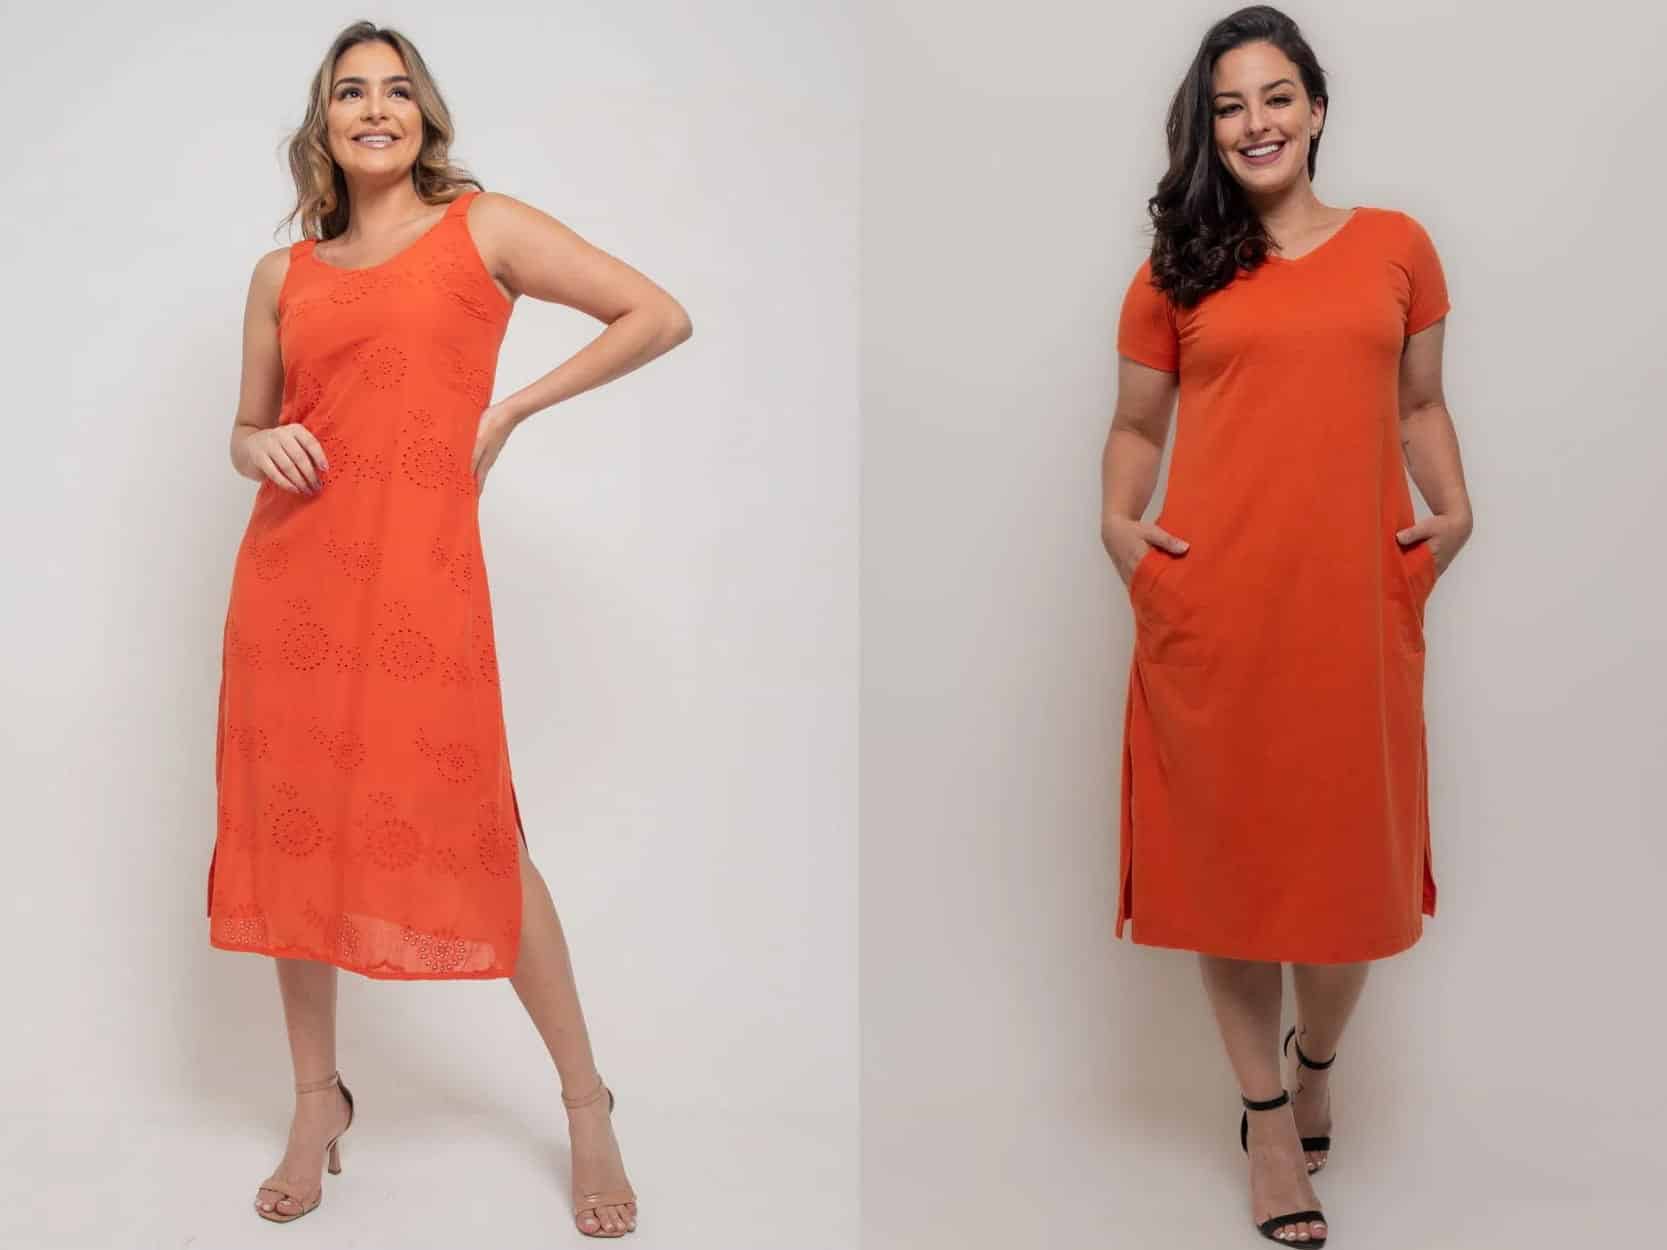 Modelos com vestidos laranjas